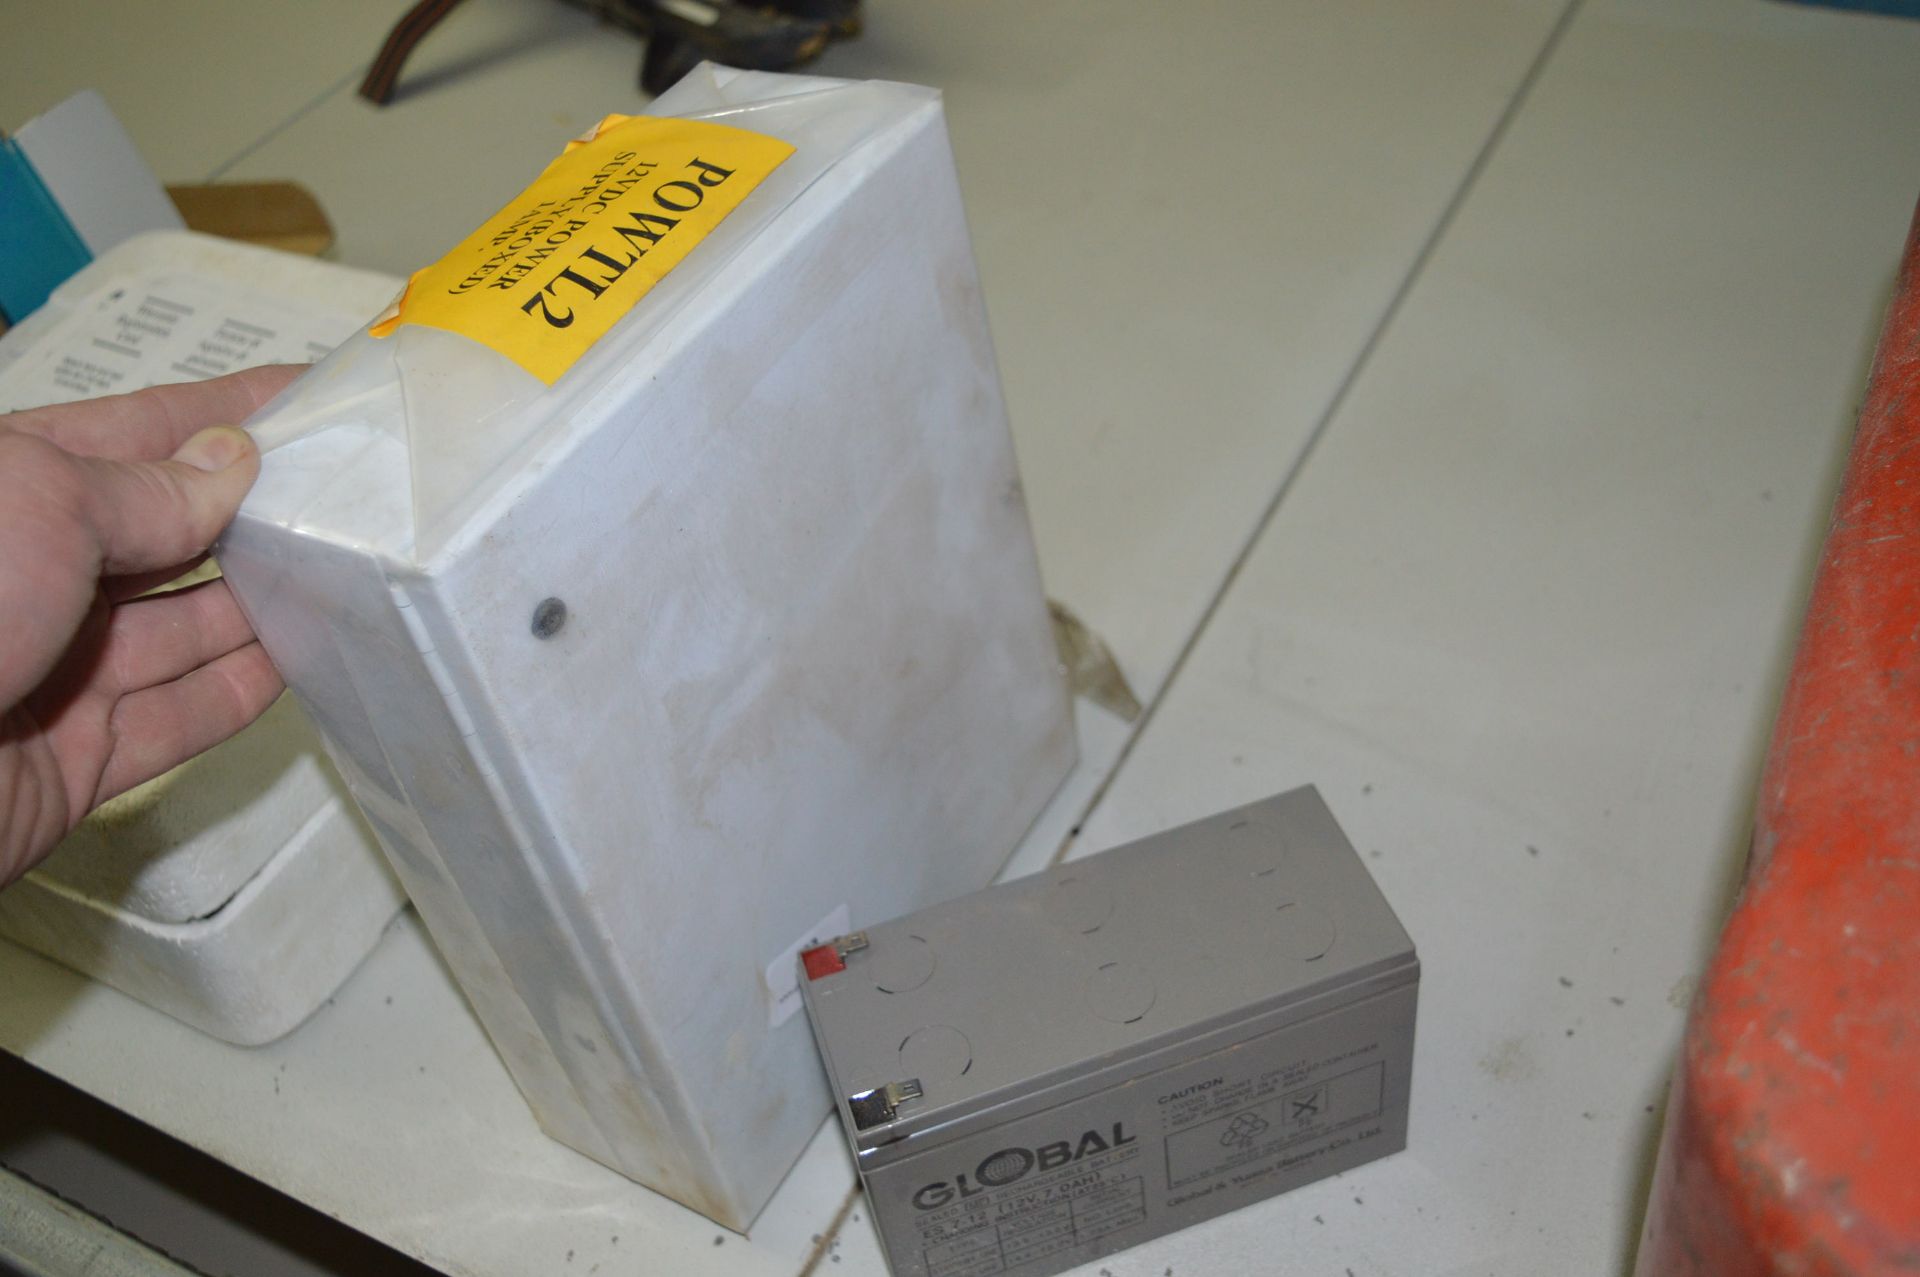 12v DC Power Supply Box and a Global 12v Battery